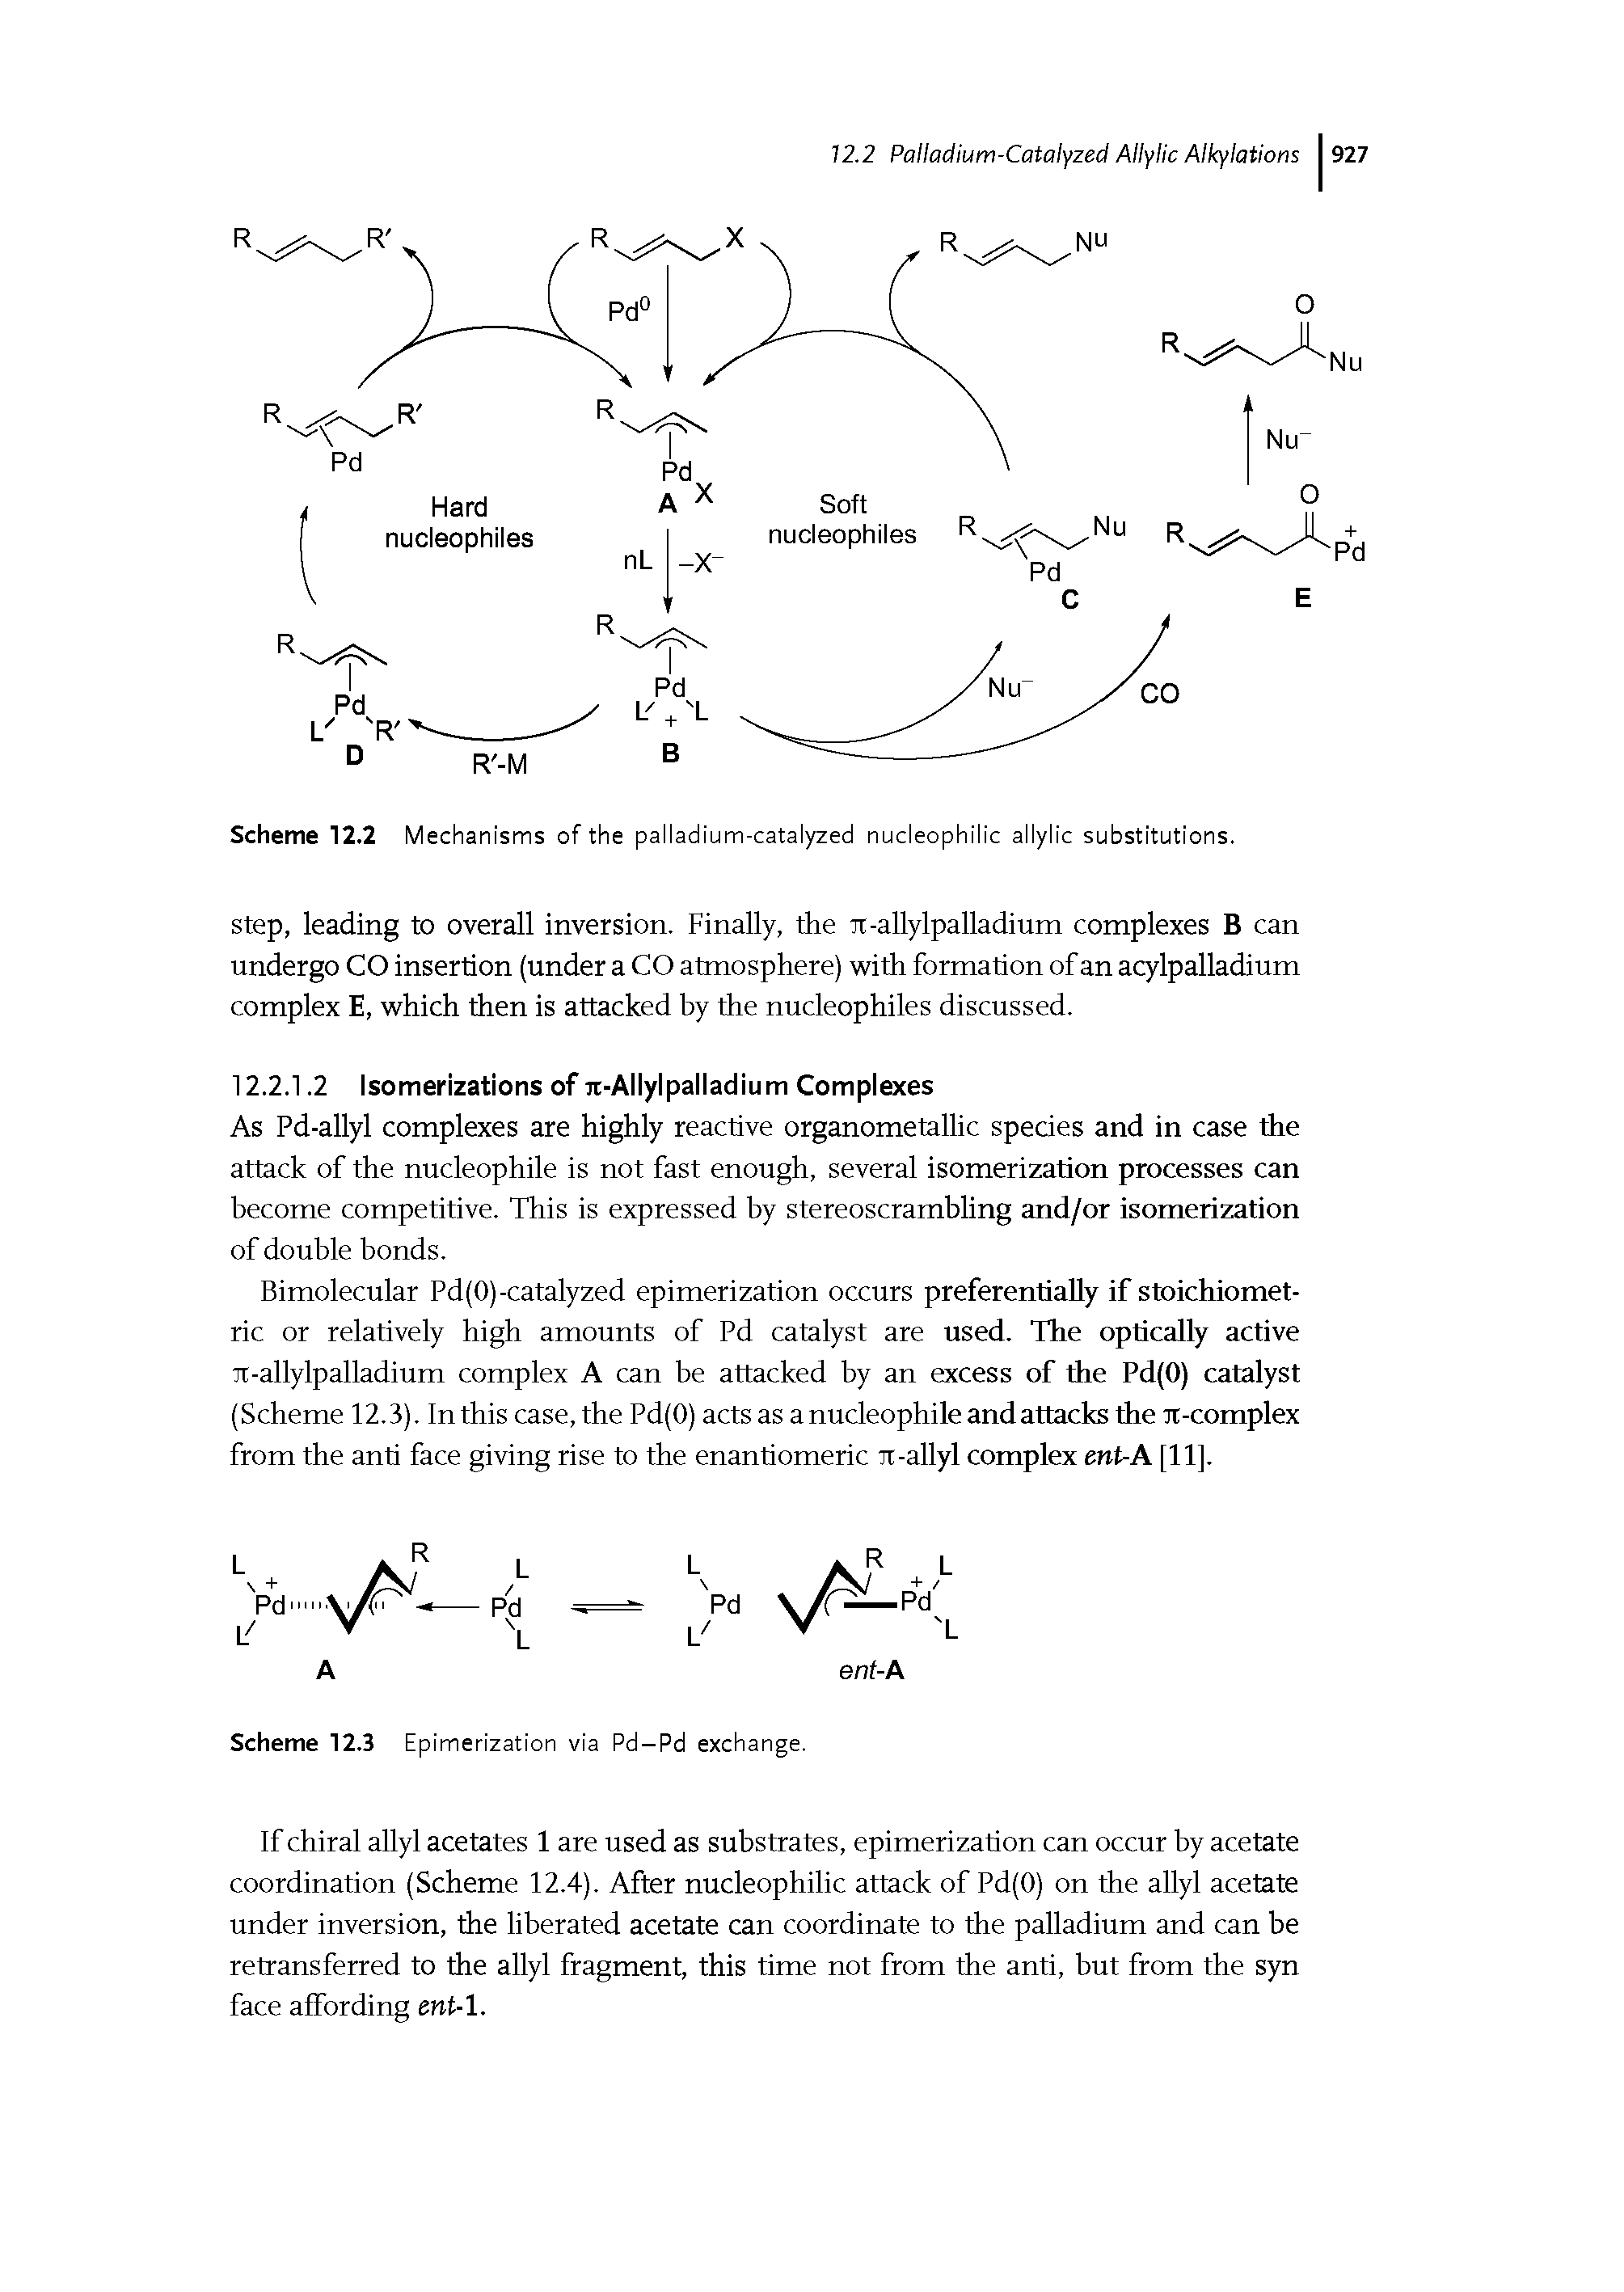 Scheme 12.2 Mechanisms of the palladium-catalyzed nucleophilic allylic substitutions.